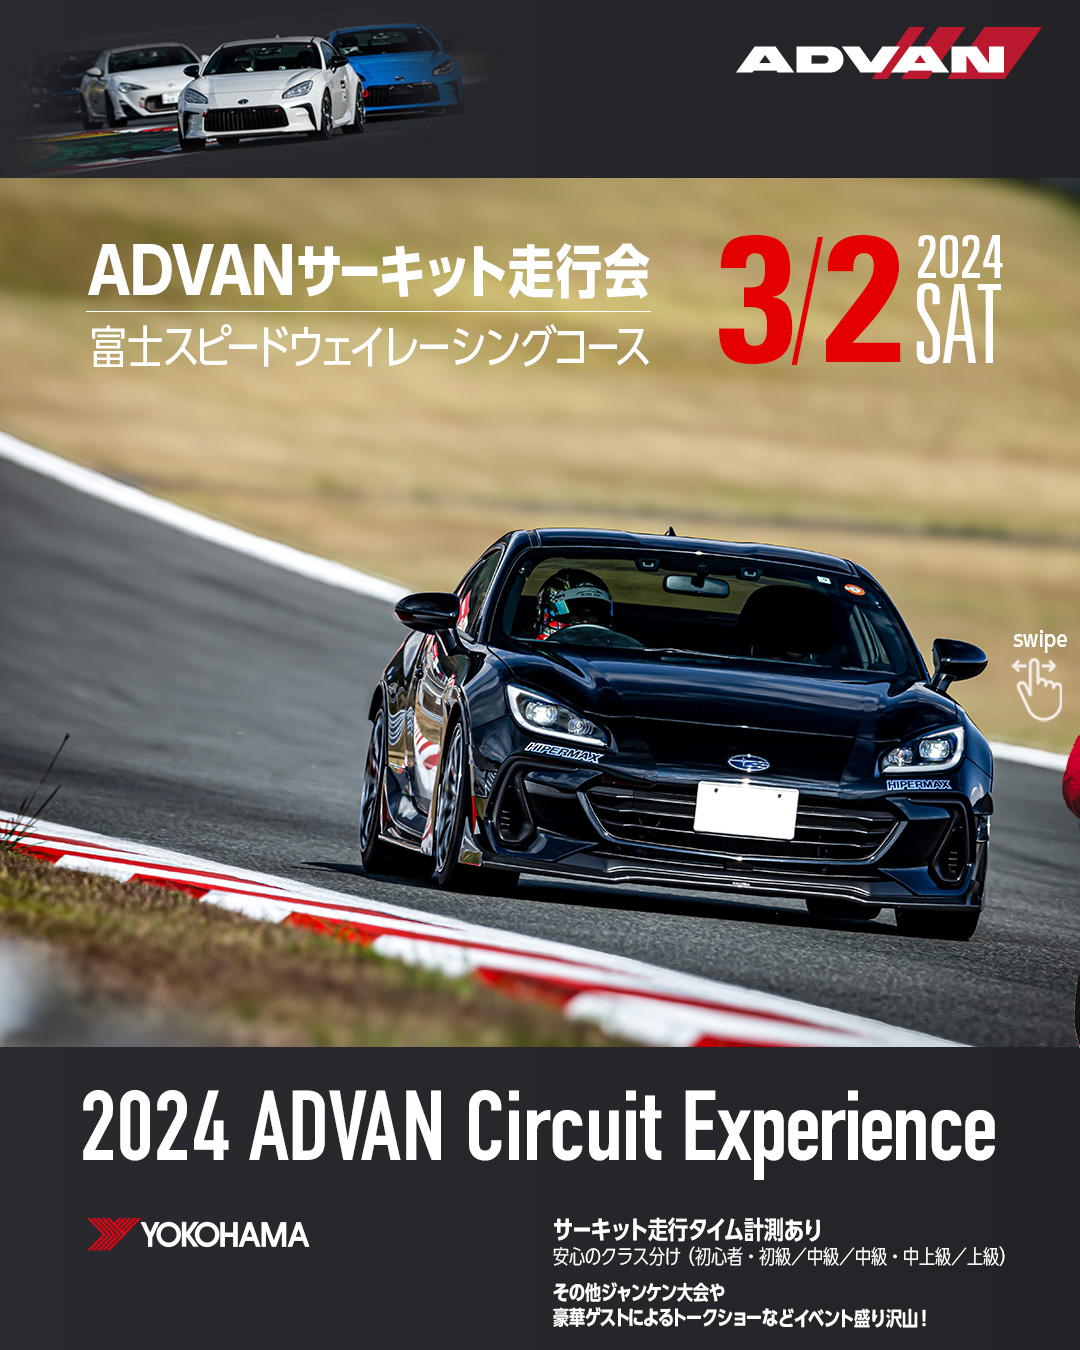 ADVAN Circuit Experience  ーADVAN サーキット走行会ー 開催決定!!